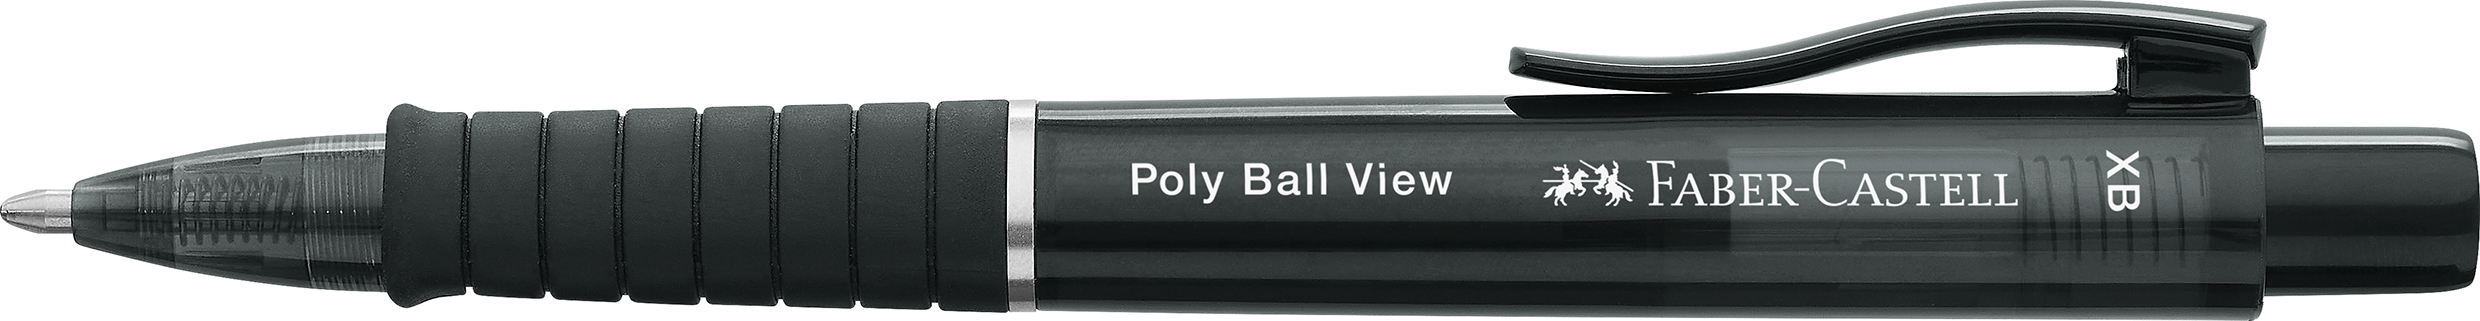 FABER-CASTELL Stylo à bille Poly Ball View 145755 Black XB